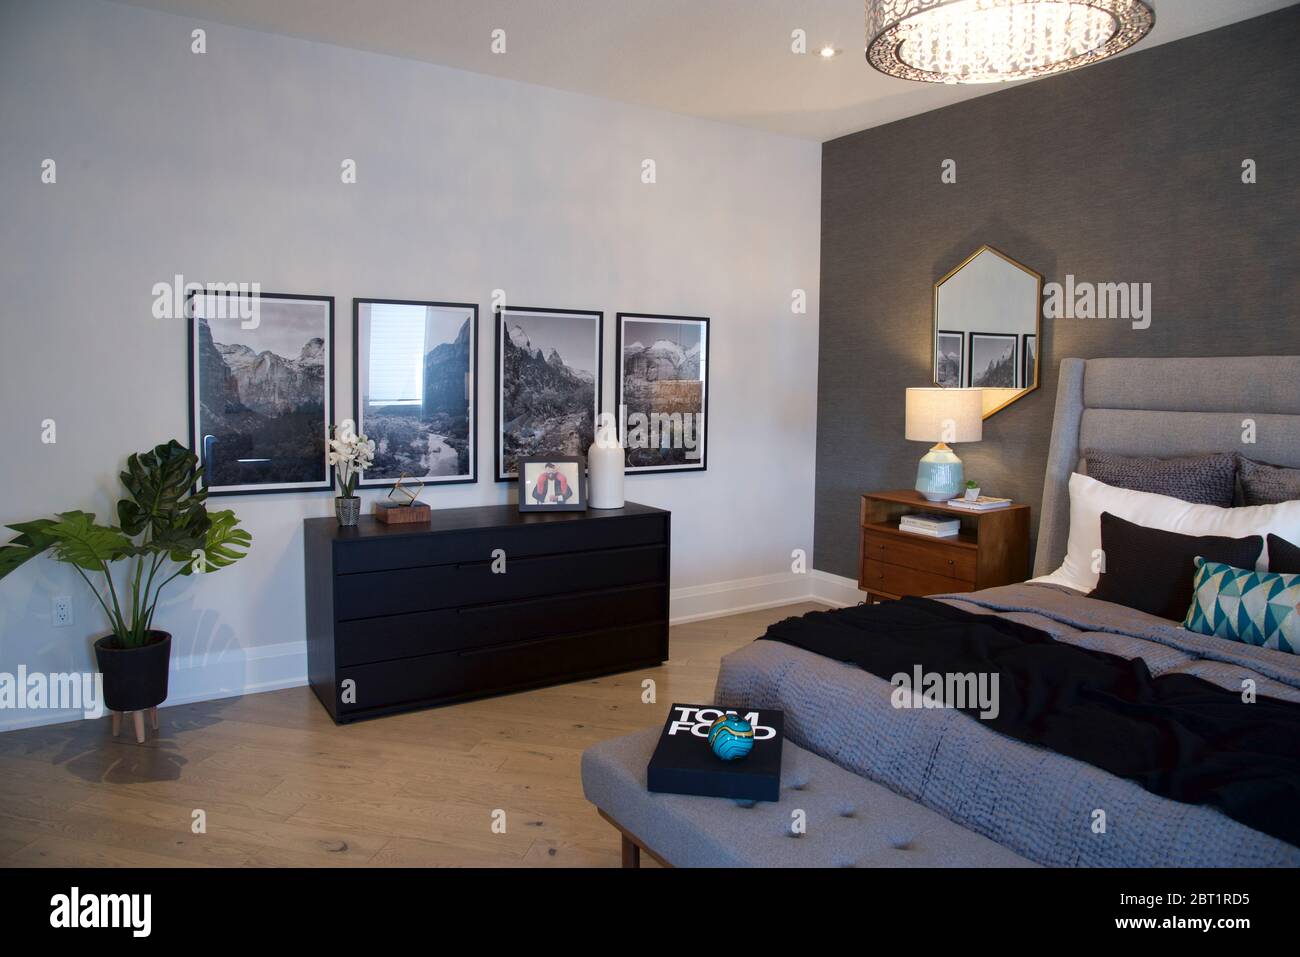 Kleinburg, Ontario / Canada - 08/31/2019: Bedroom Interior Home Architecture, photos of the bedroom, interior. Stock Photo